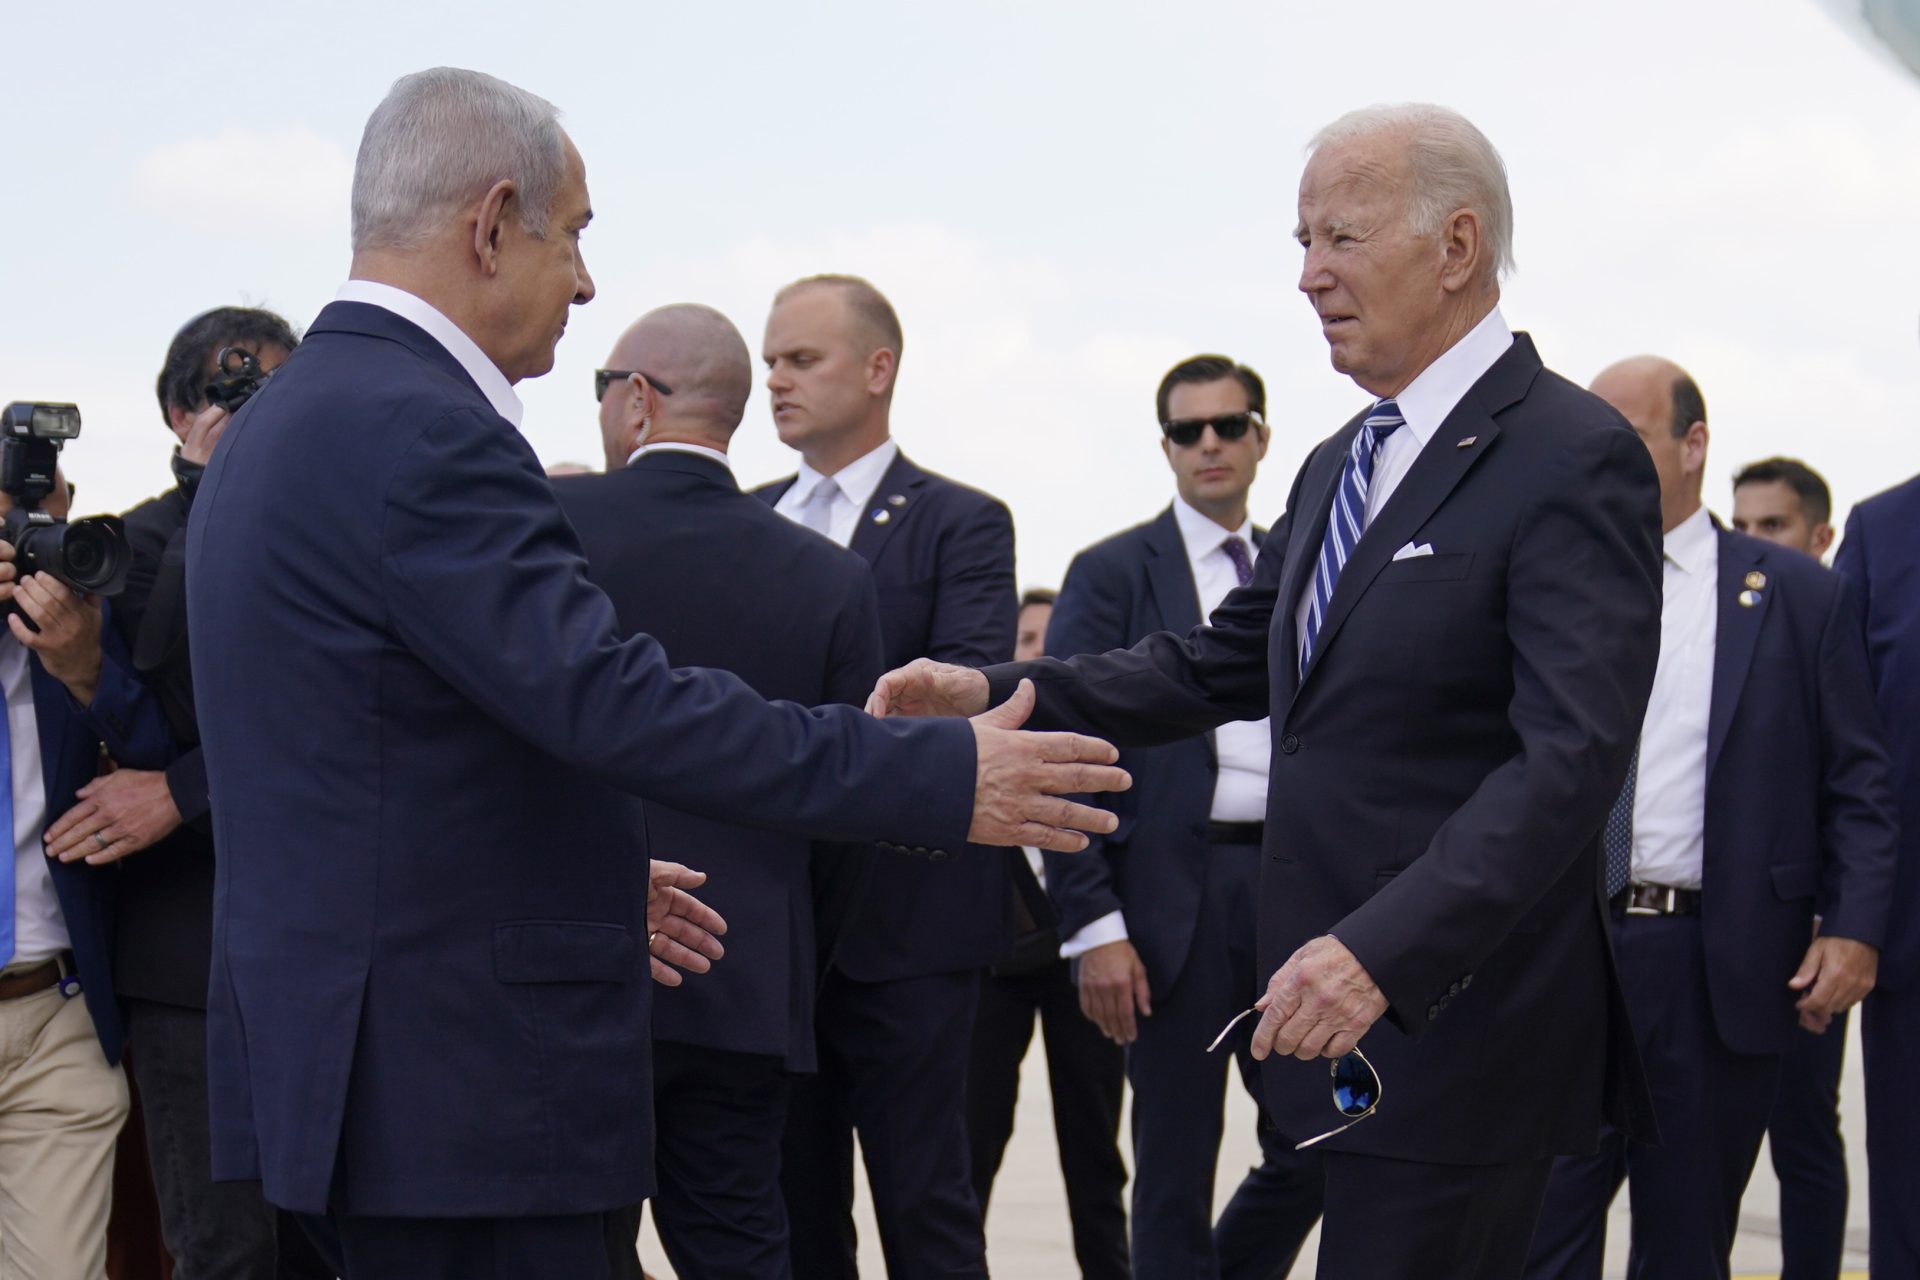 Cumprimento de Joe Biden e Benjamin Netanyahu - Foto: Evan Vucci/Associated Press/Estadão Conteúdo